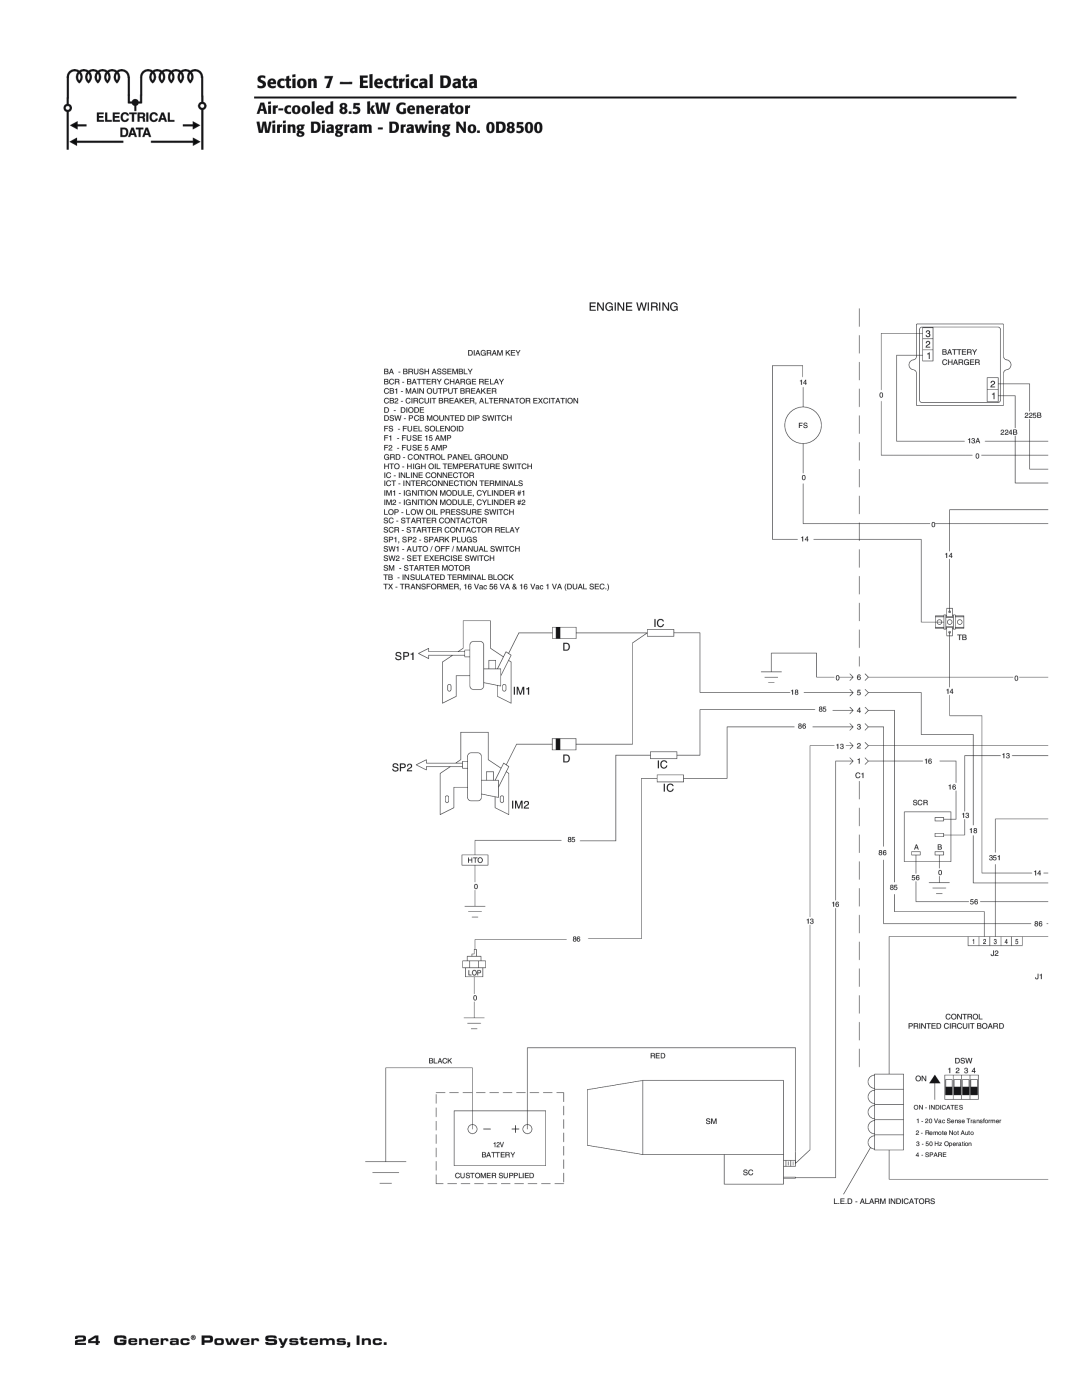 Generac 004692-0 owner manual Electrical Data, Air-cooled8.5 kW Generator, Wiring Diagram - Drawing No. 0D8500 